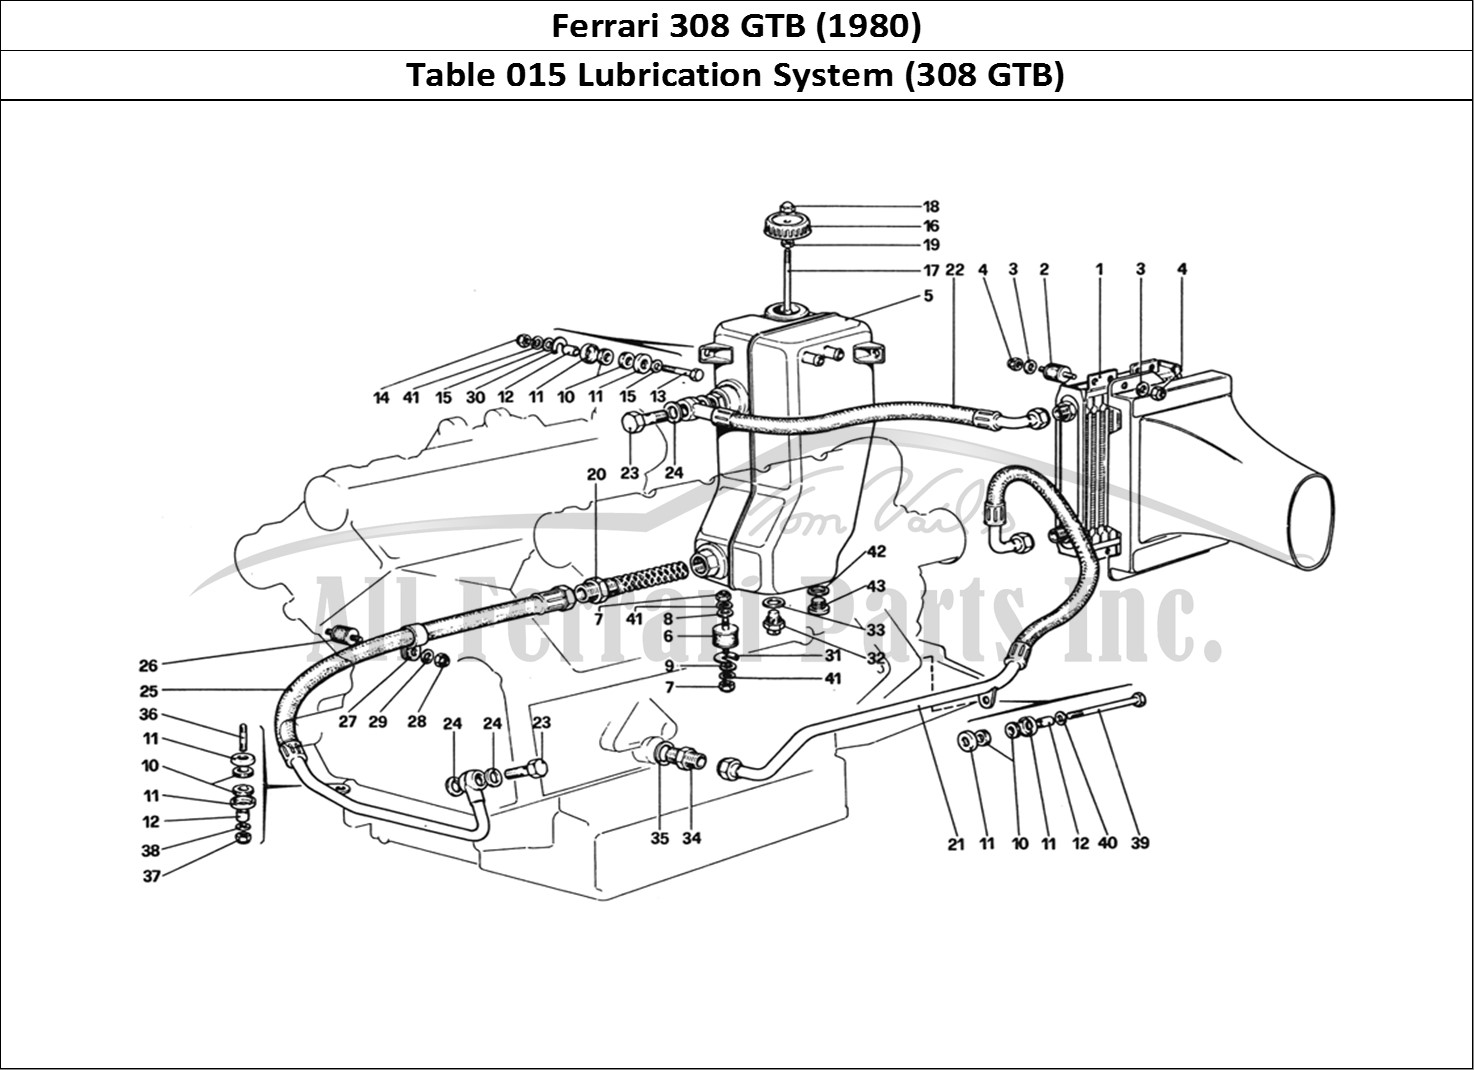 Ferrari Parts Ferrari 308 GTB (1980) Page 015 Lubrification System (308